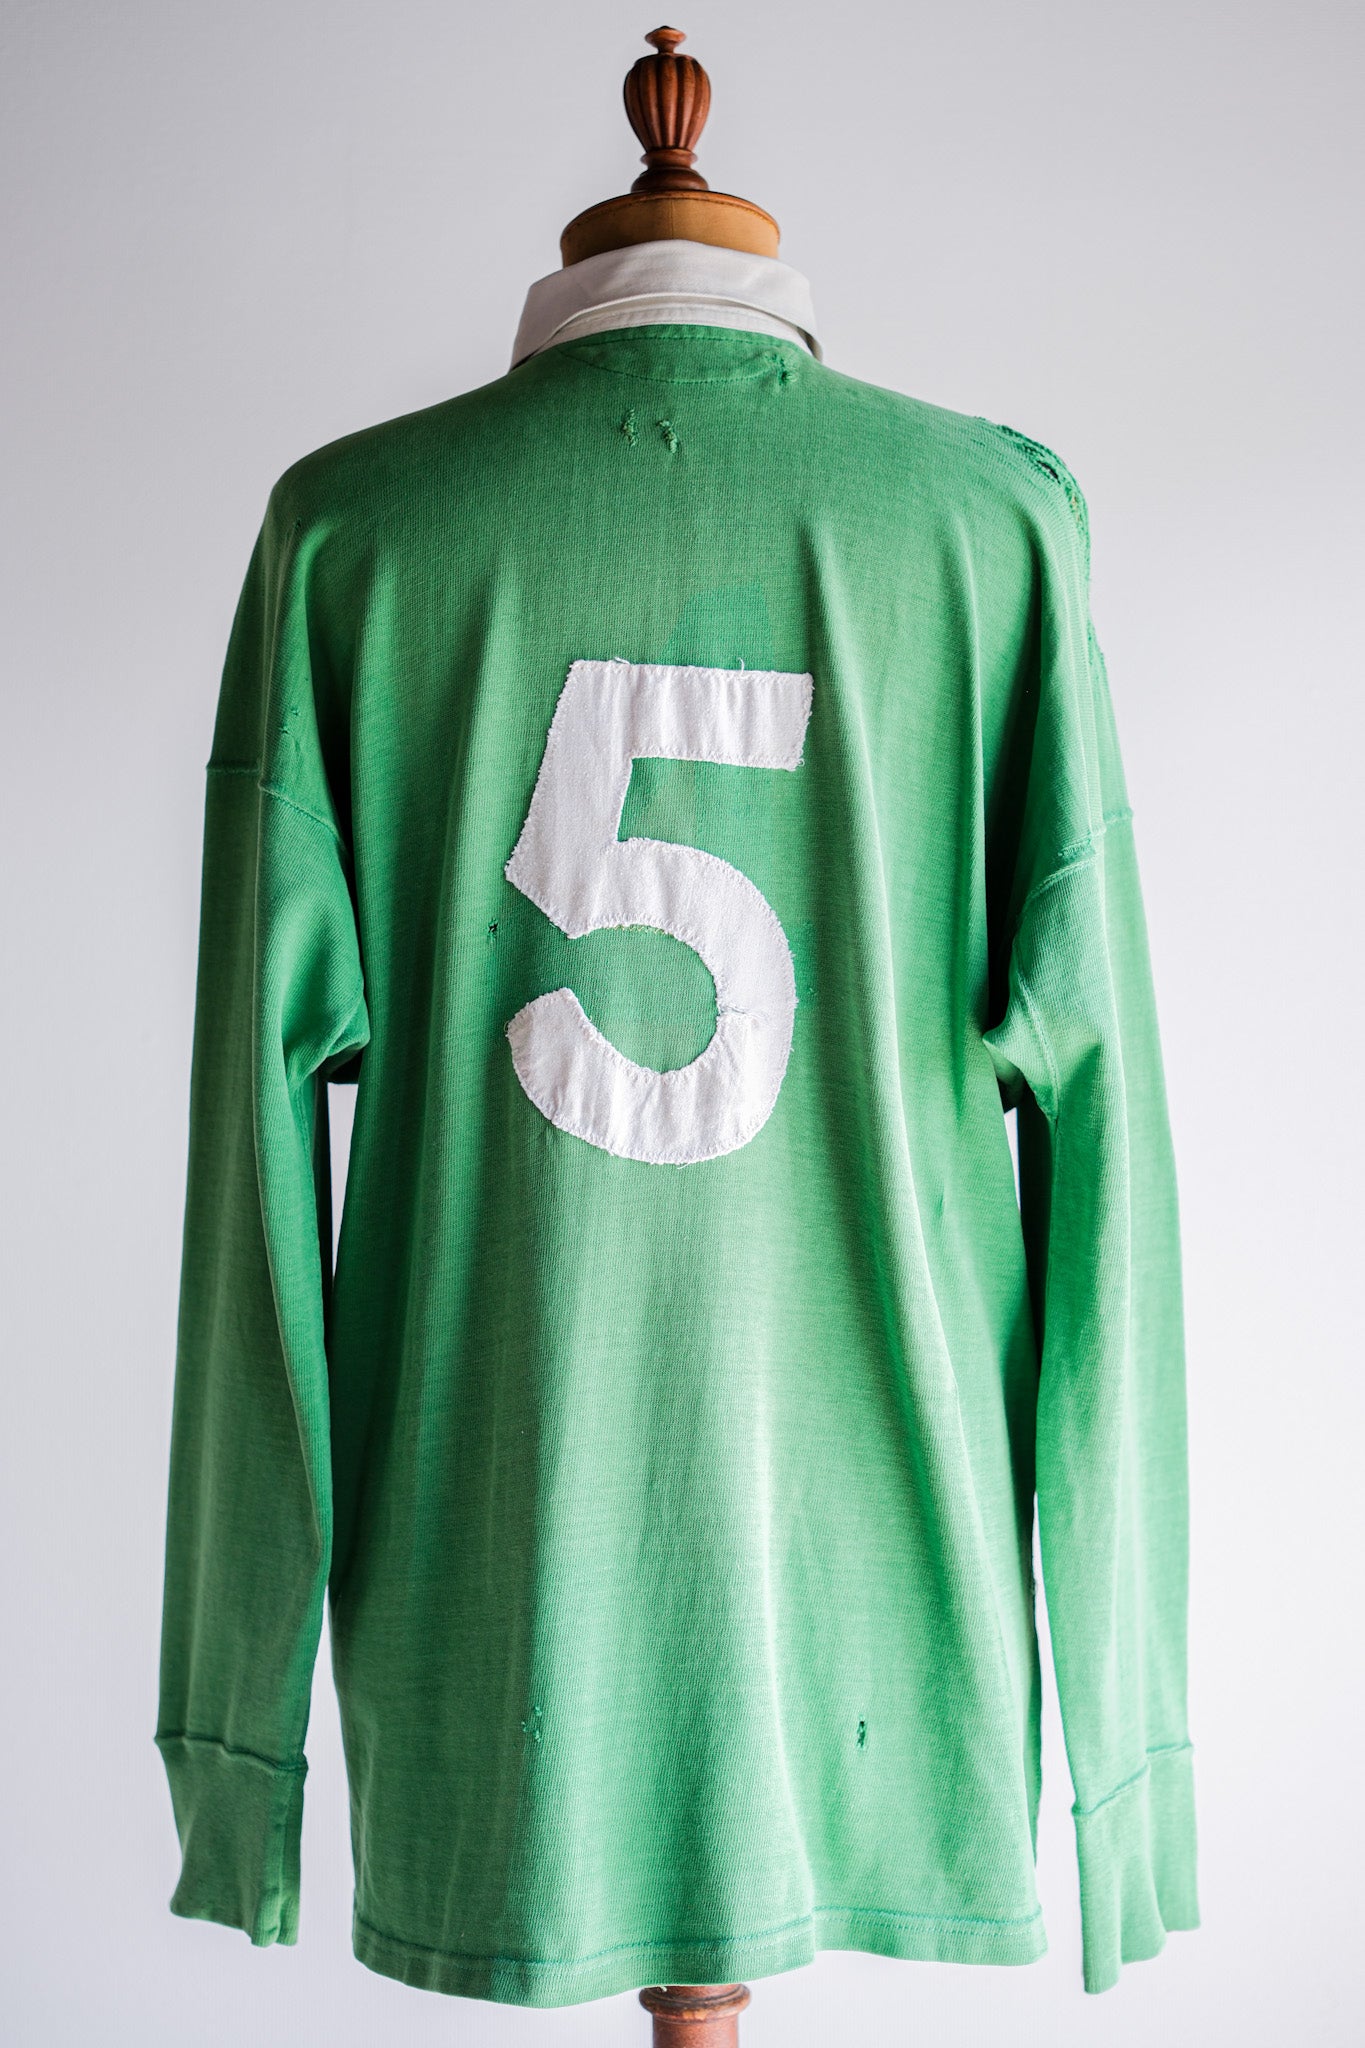 [~ 60's] British Vintage Numbering Rugger Shirt Taille.46 "Umbro" "Boro"